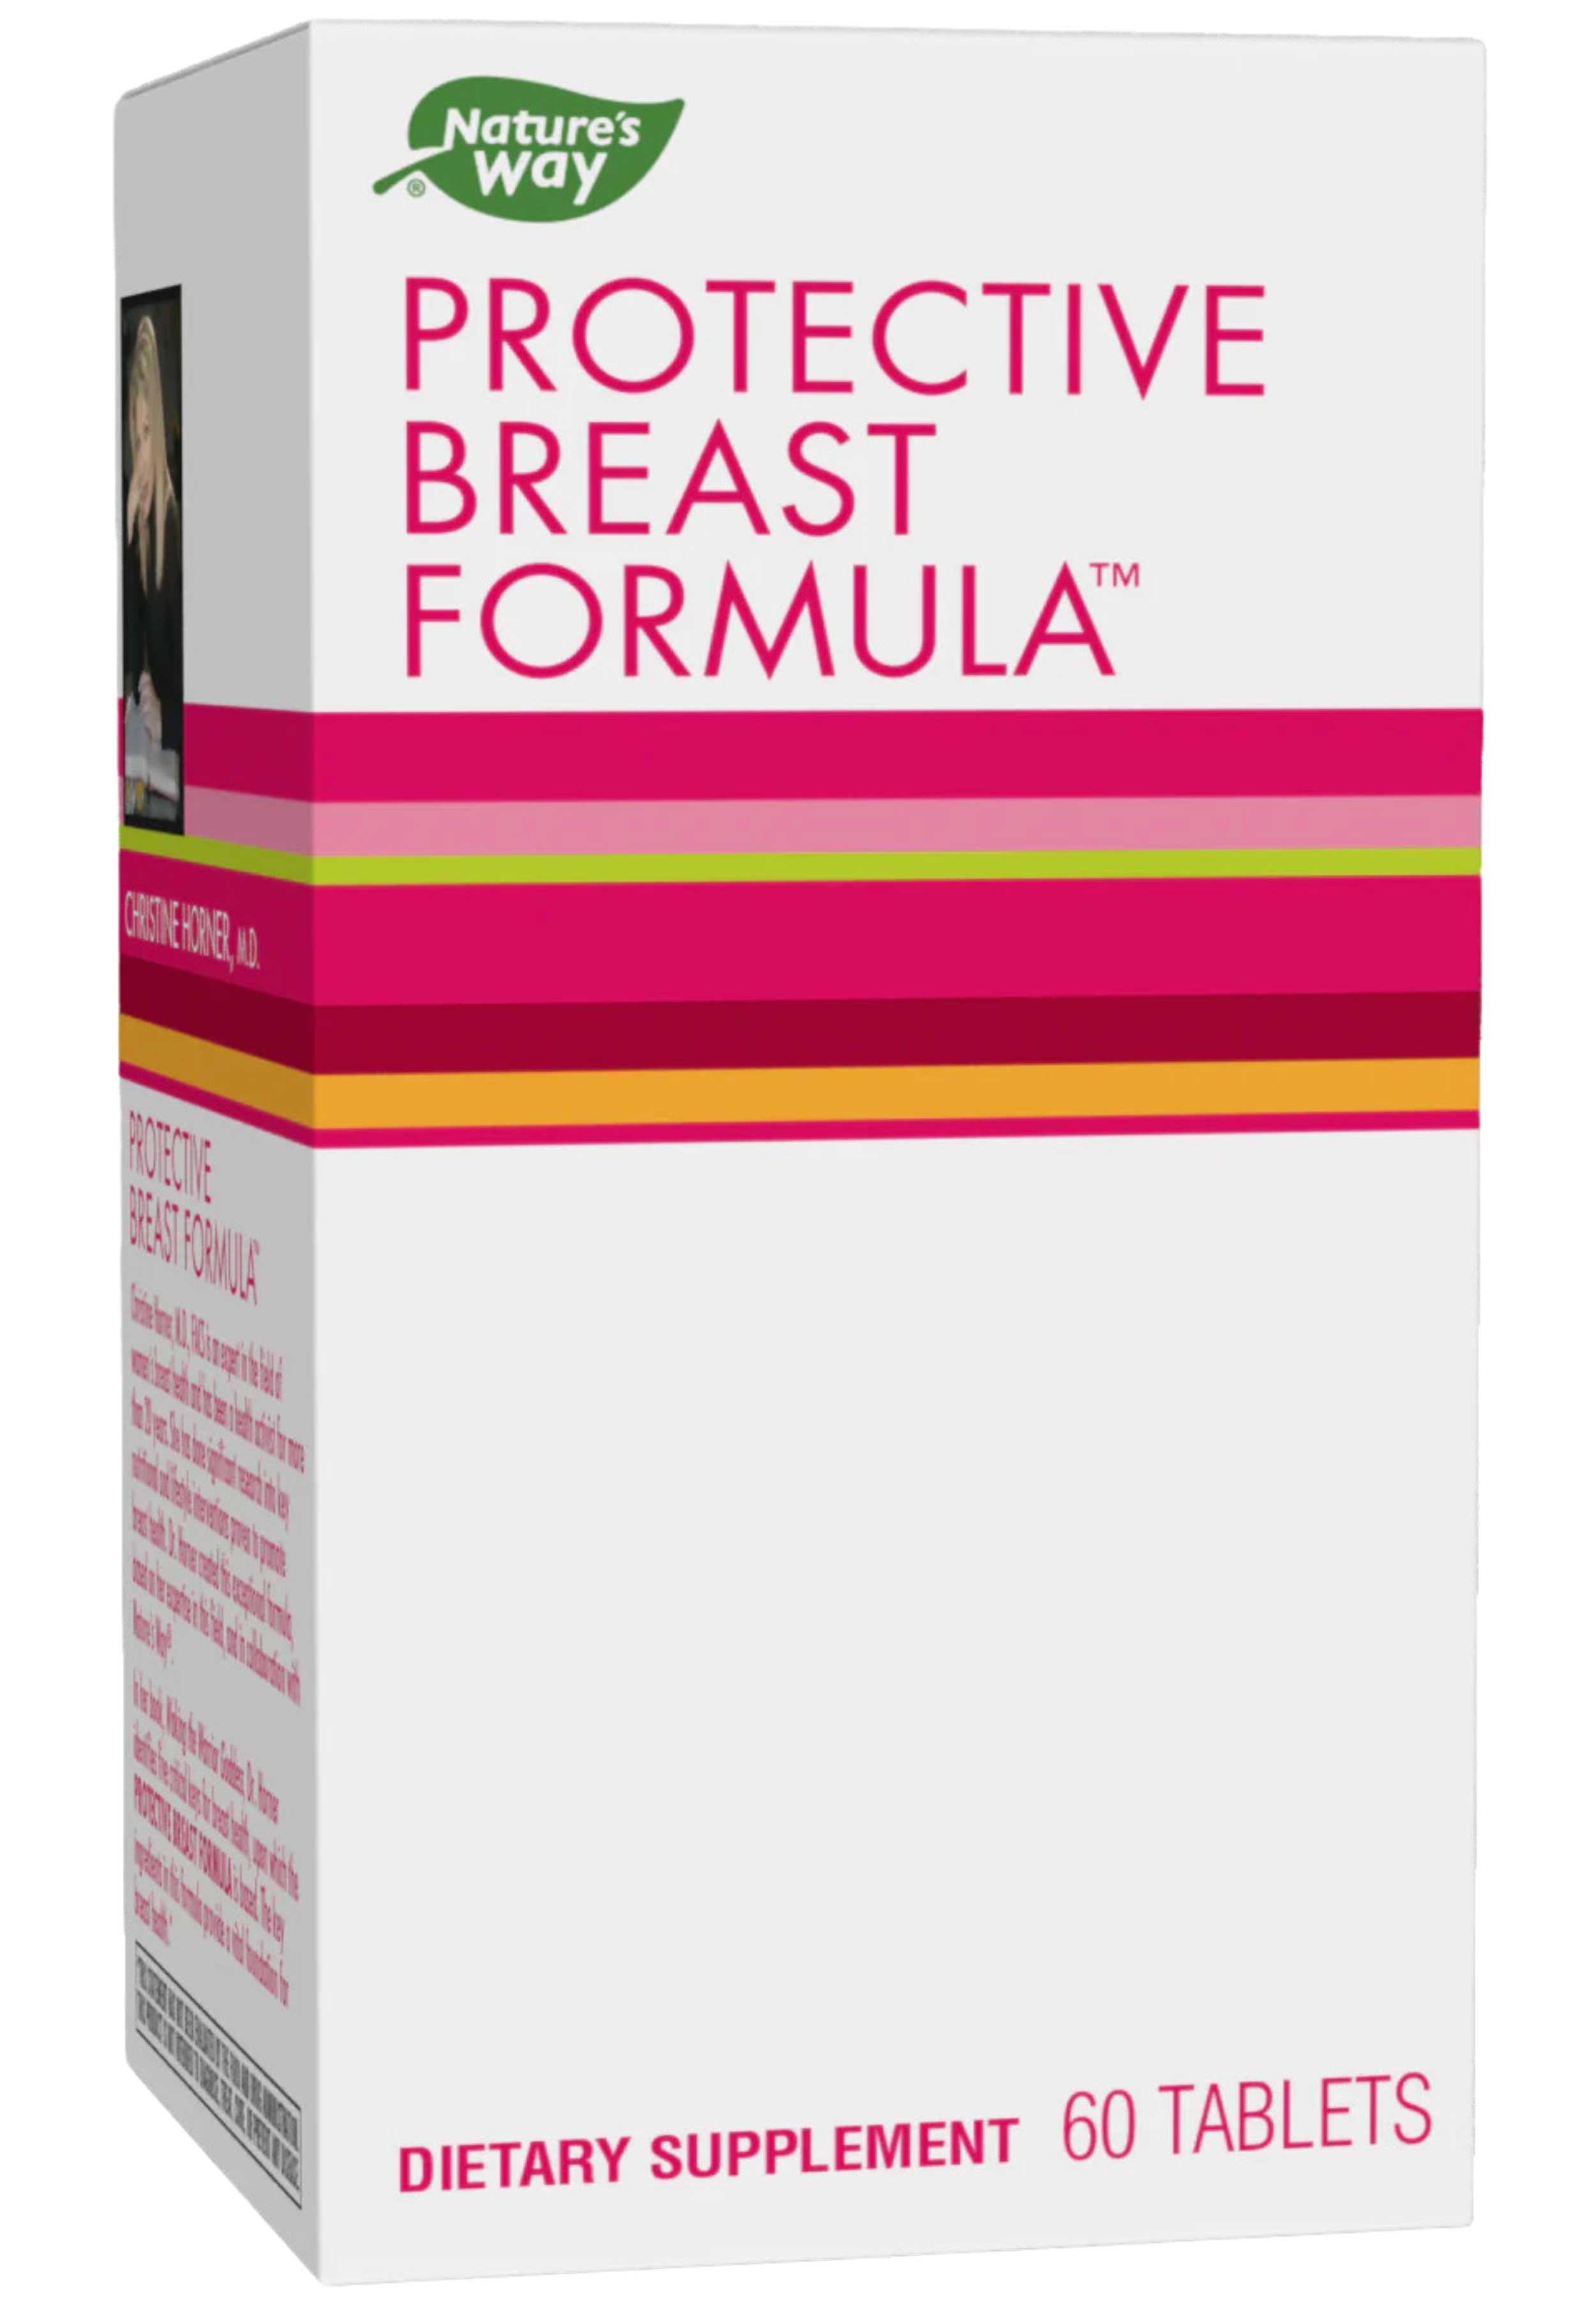 Nature's Way Protective Breast Formula